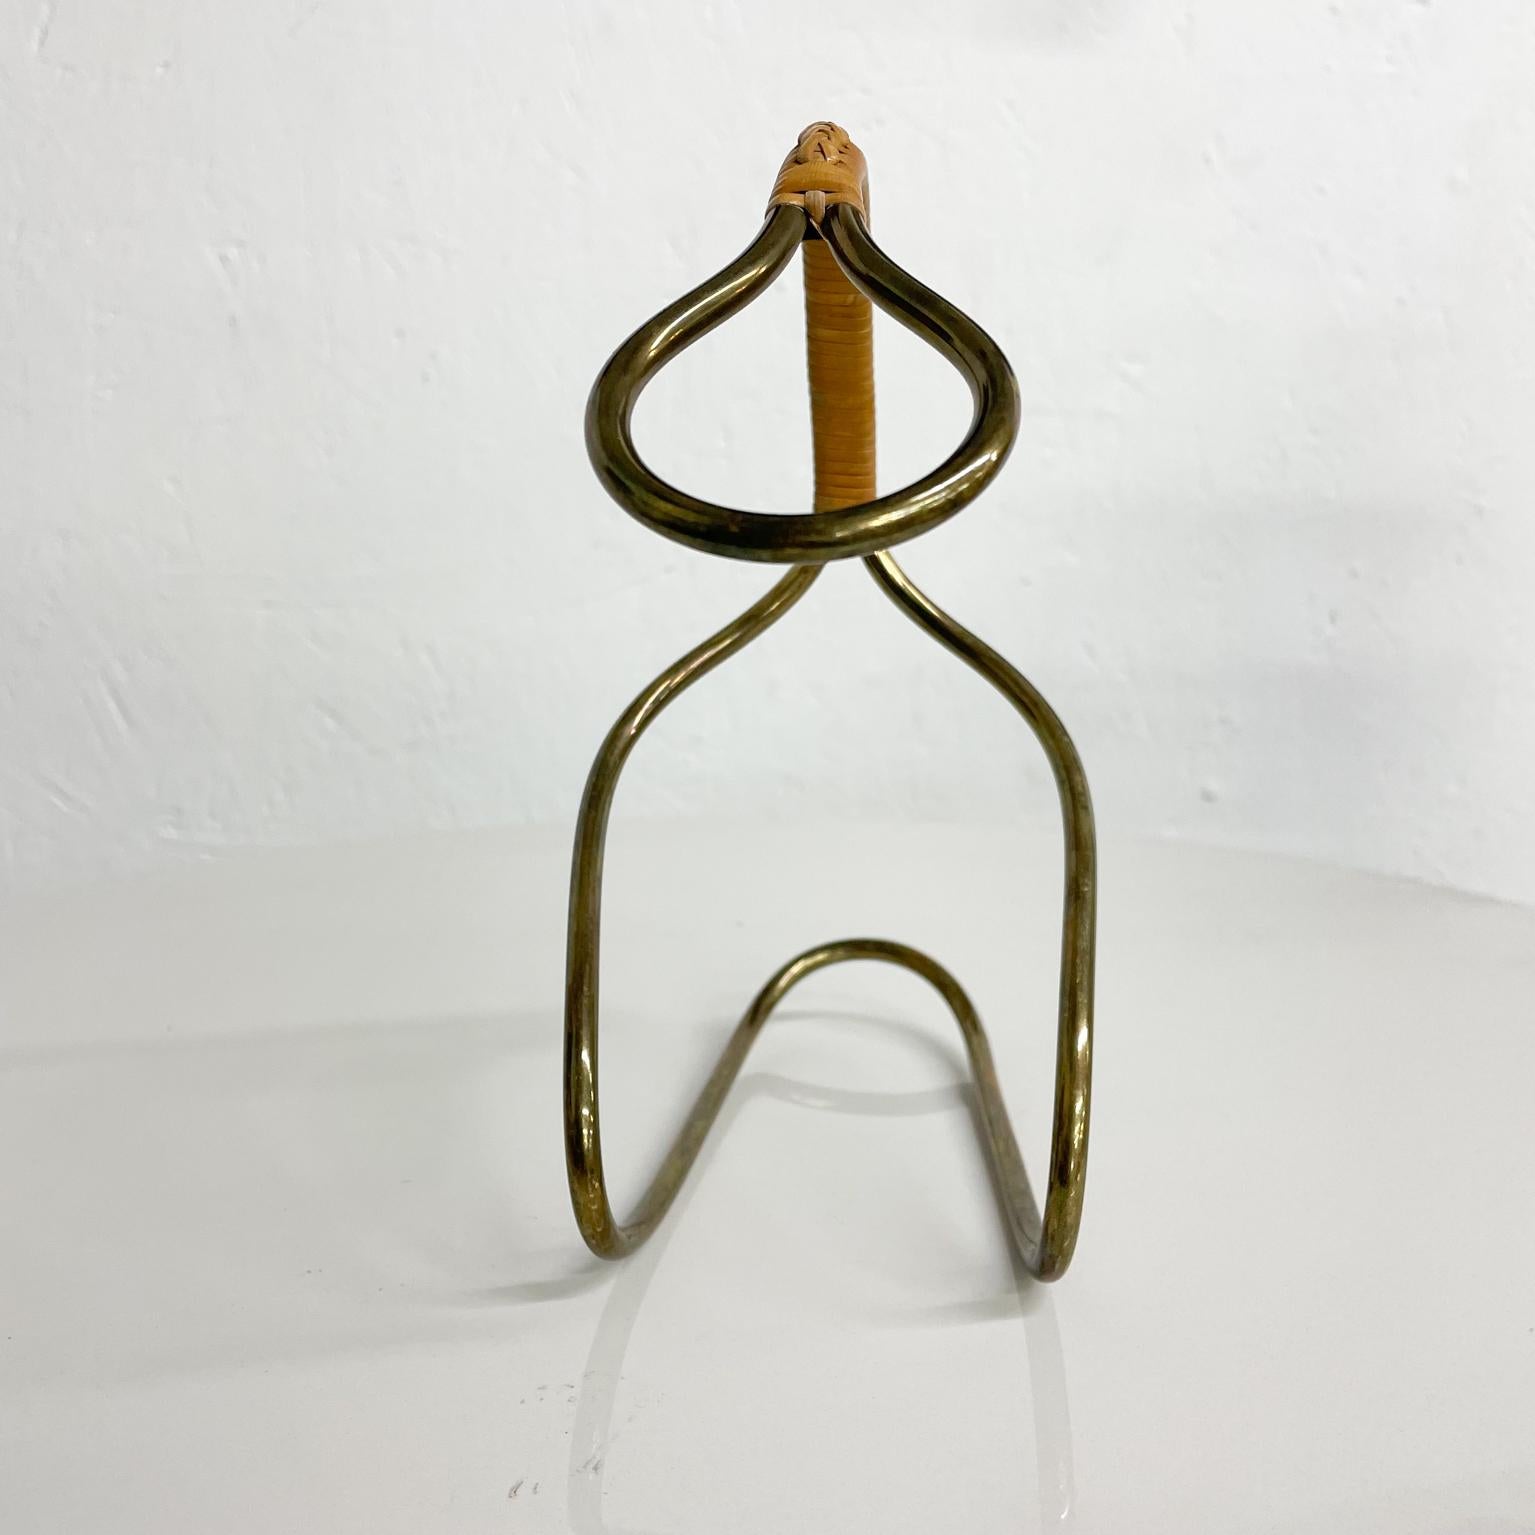 Mid-20th Century Sculptural Modern Wine Bottle Holder Brass & Cane Carl Aubock, Austria, 1950s For Sale